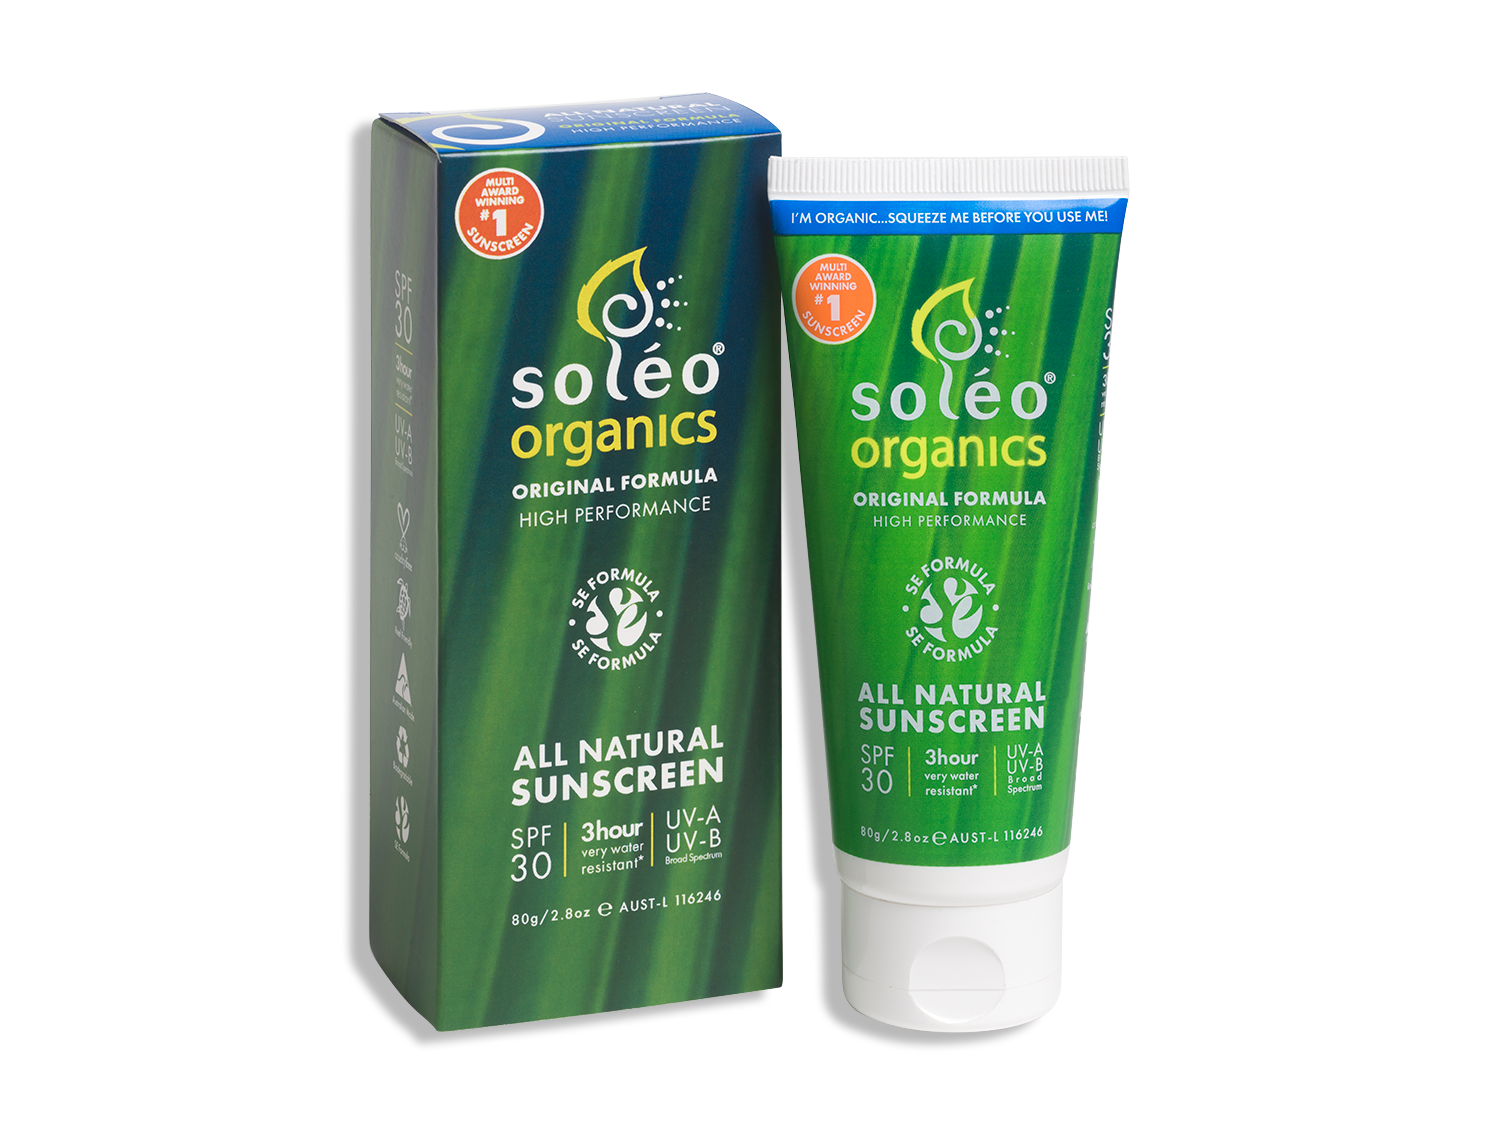 Soleo Organics natural performance sunscreen